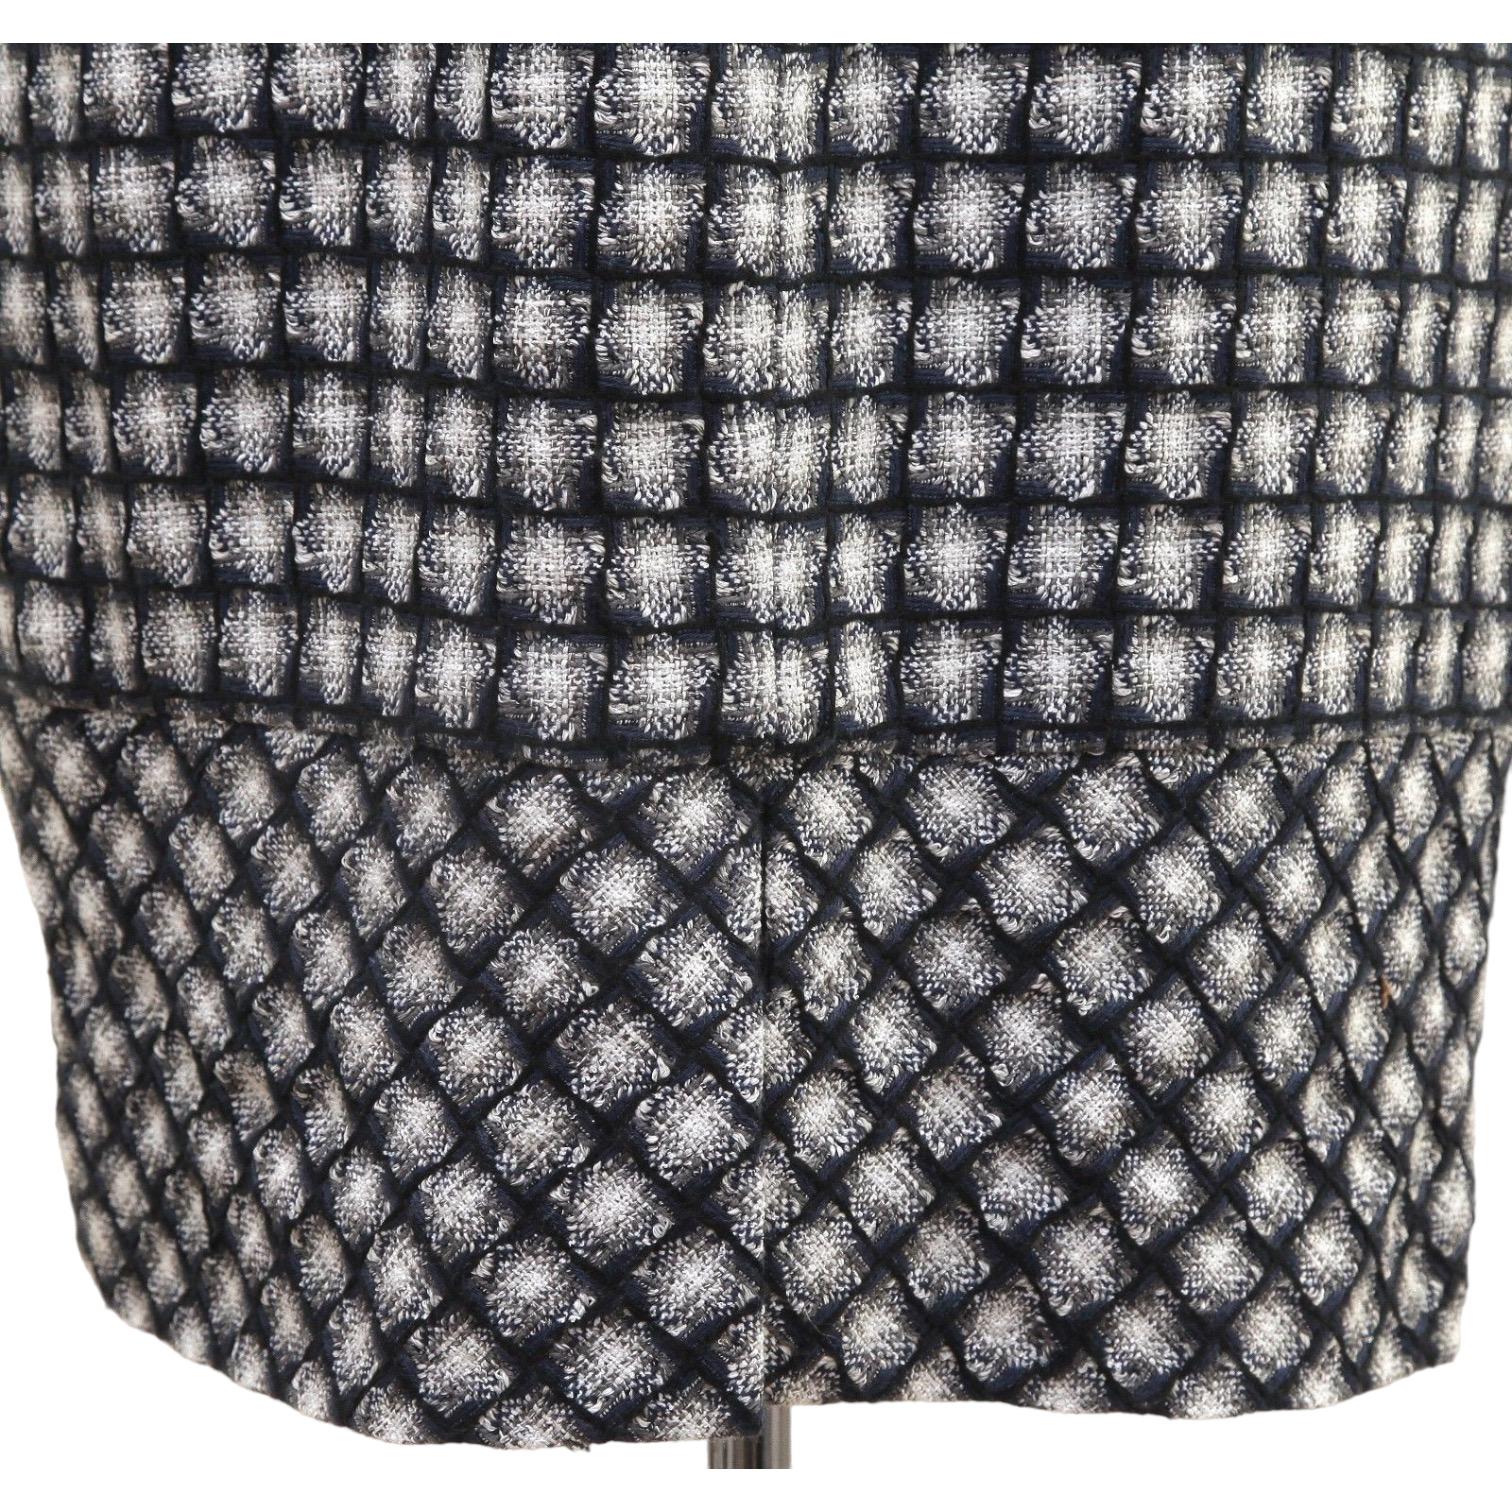 CHANEL Dress Tweed Knit Cap Sleeve Shift Zipper Multi Color Zipper Sz 40 For Sale 6